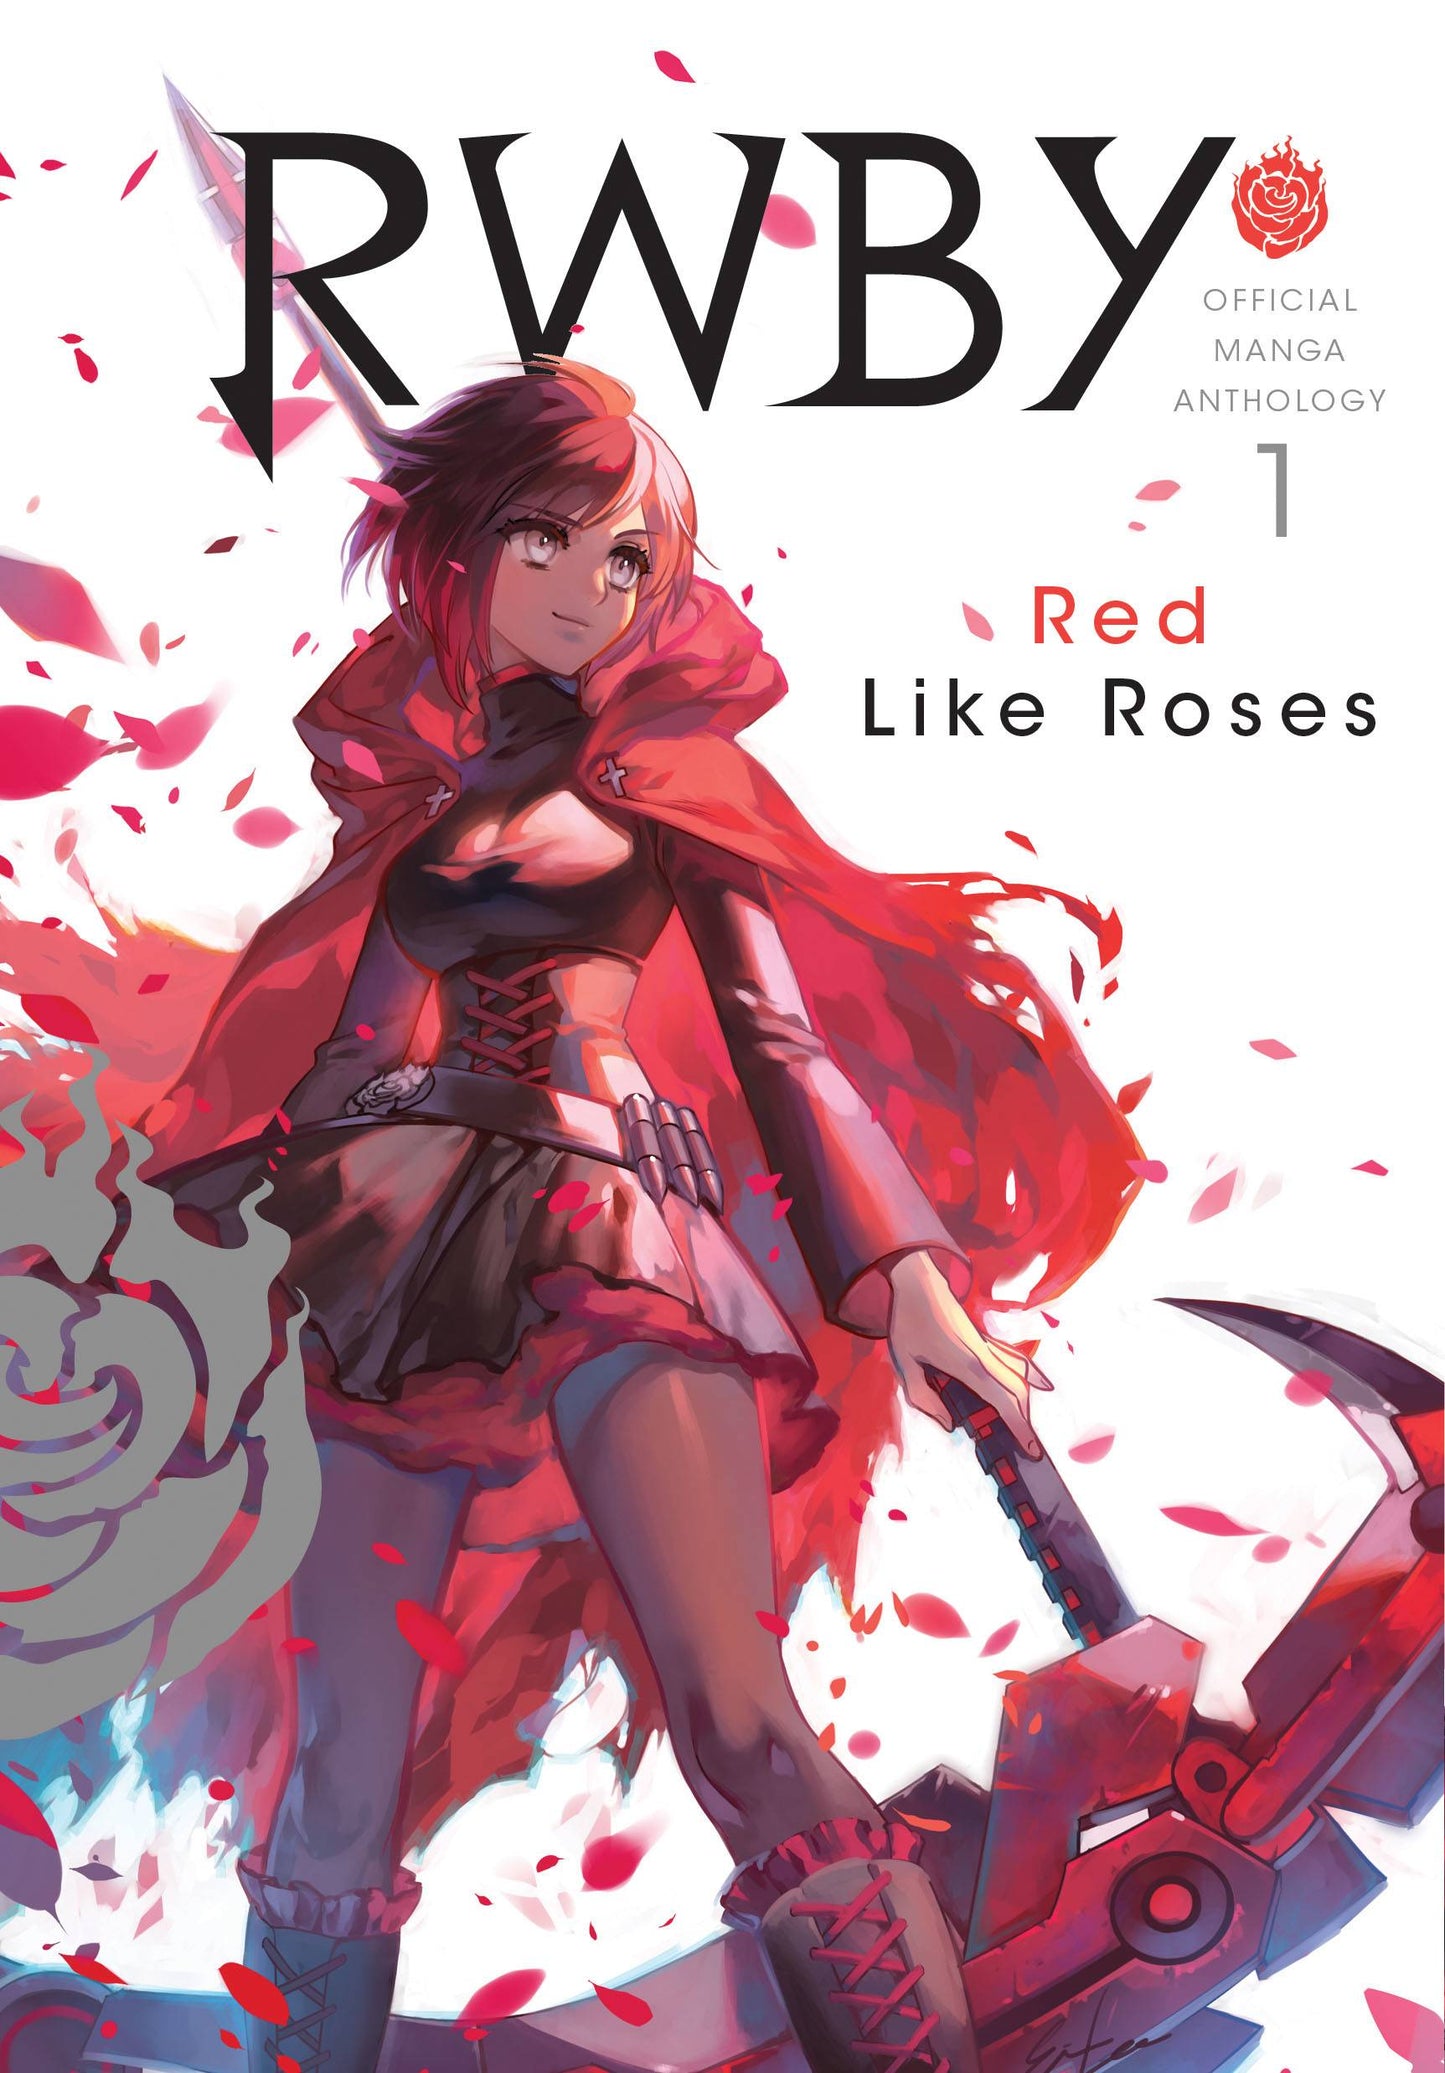 RWBY Official Manga Anthology Vol. 01 Red Like Roses